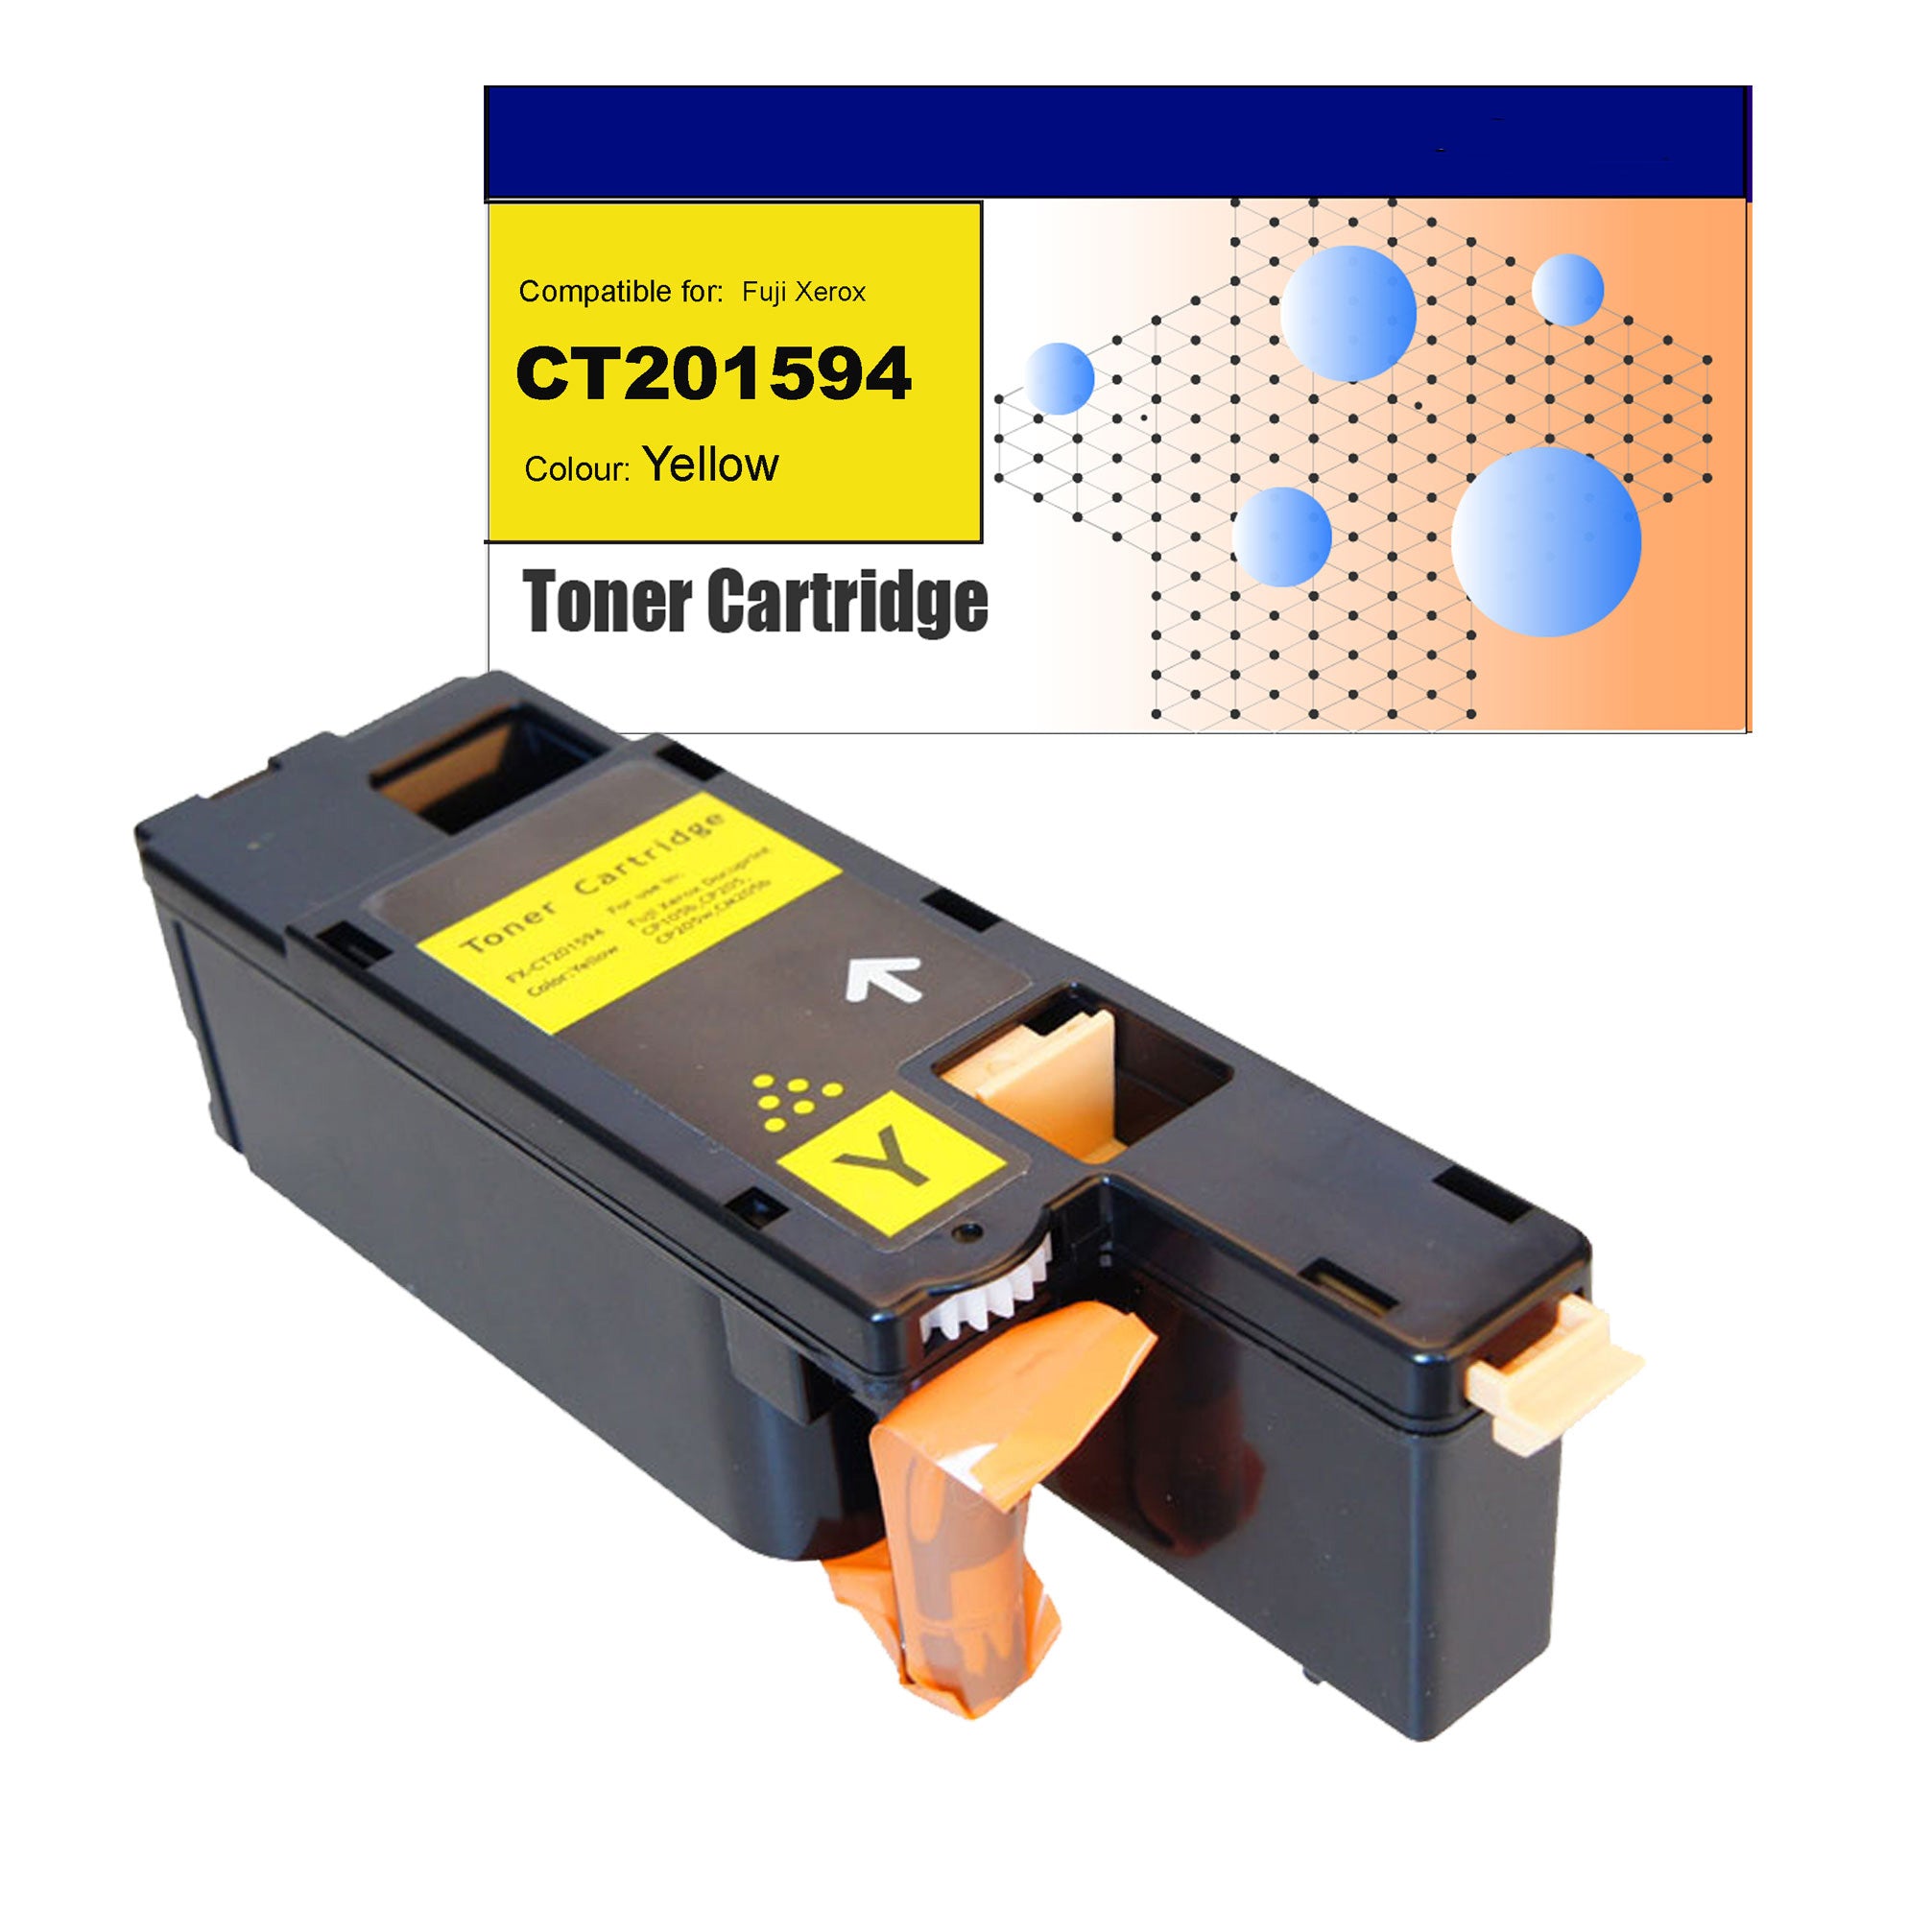 Compatible Toner for Fuji Xerox CT201594 (CP105) Yellow Toner Cartridges